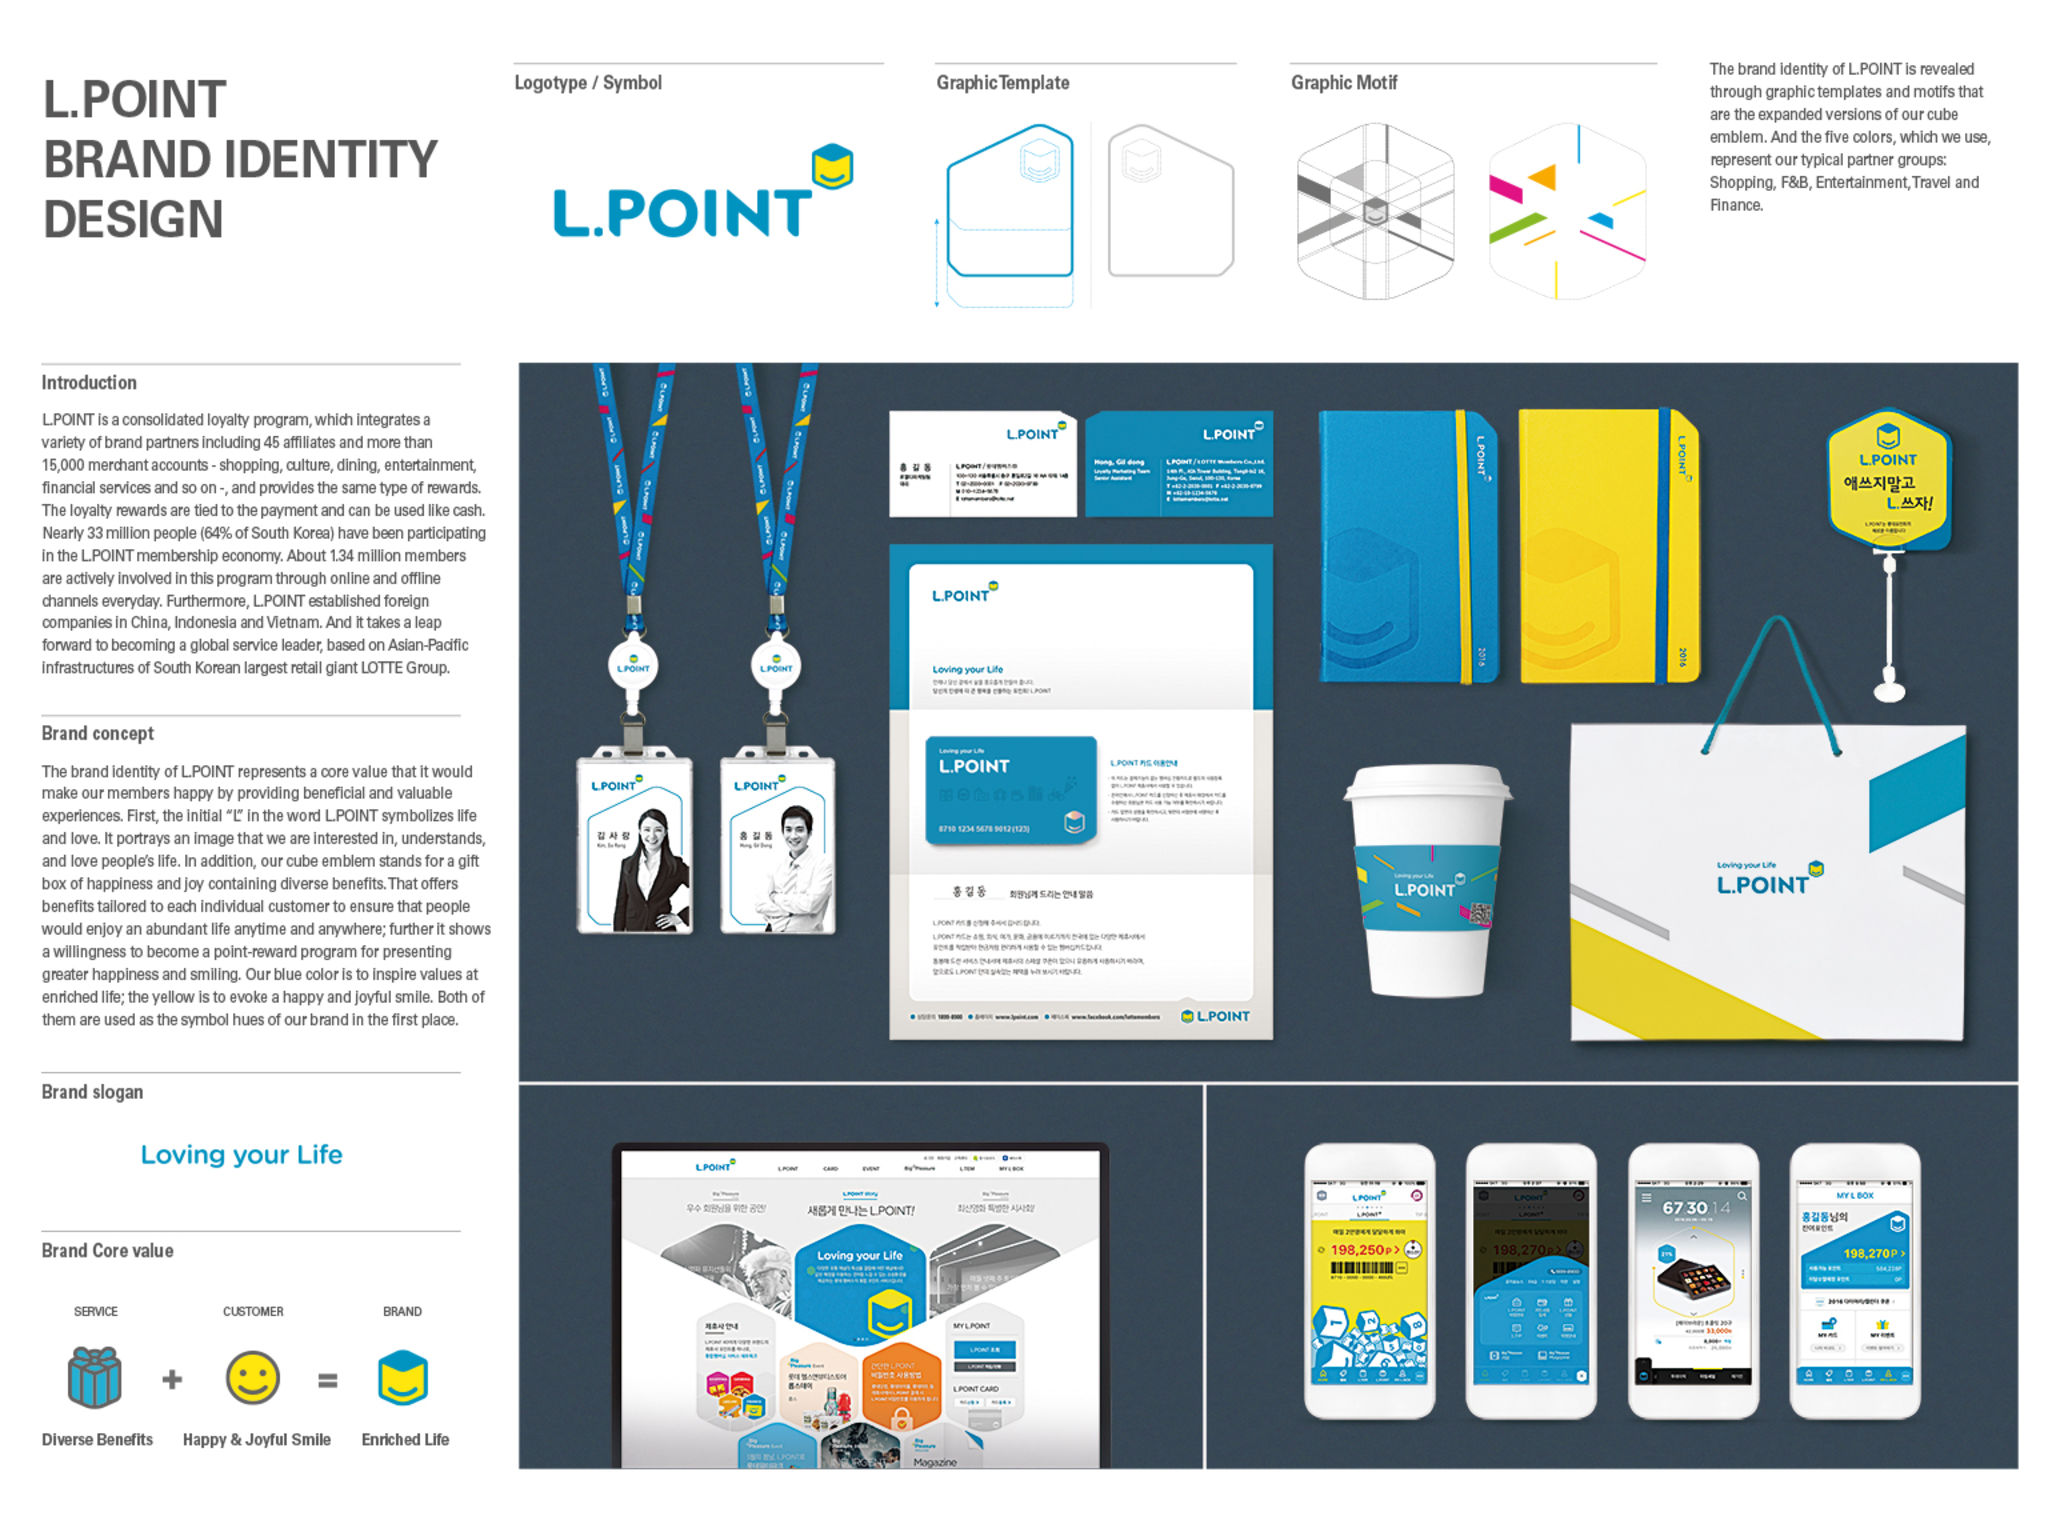 L.POINT Brand Design